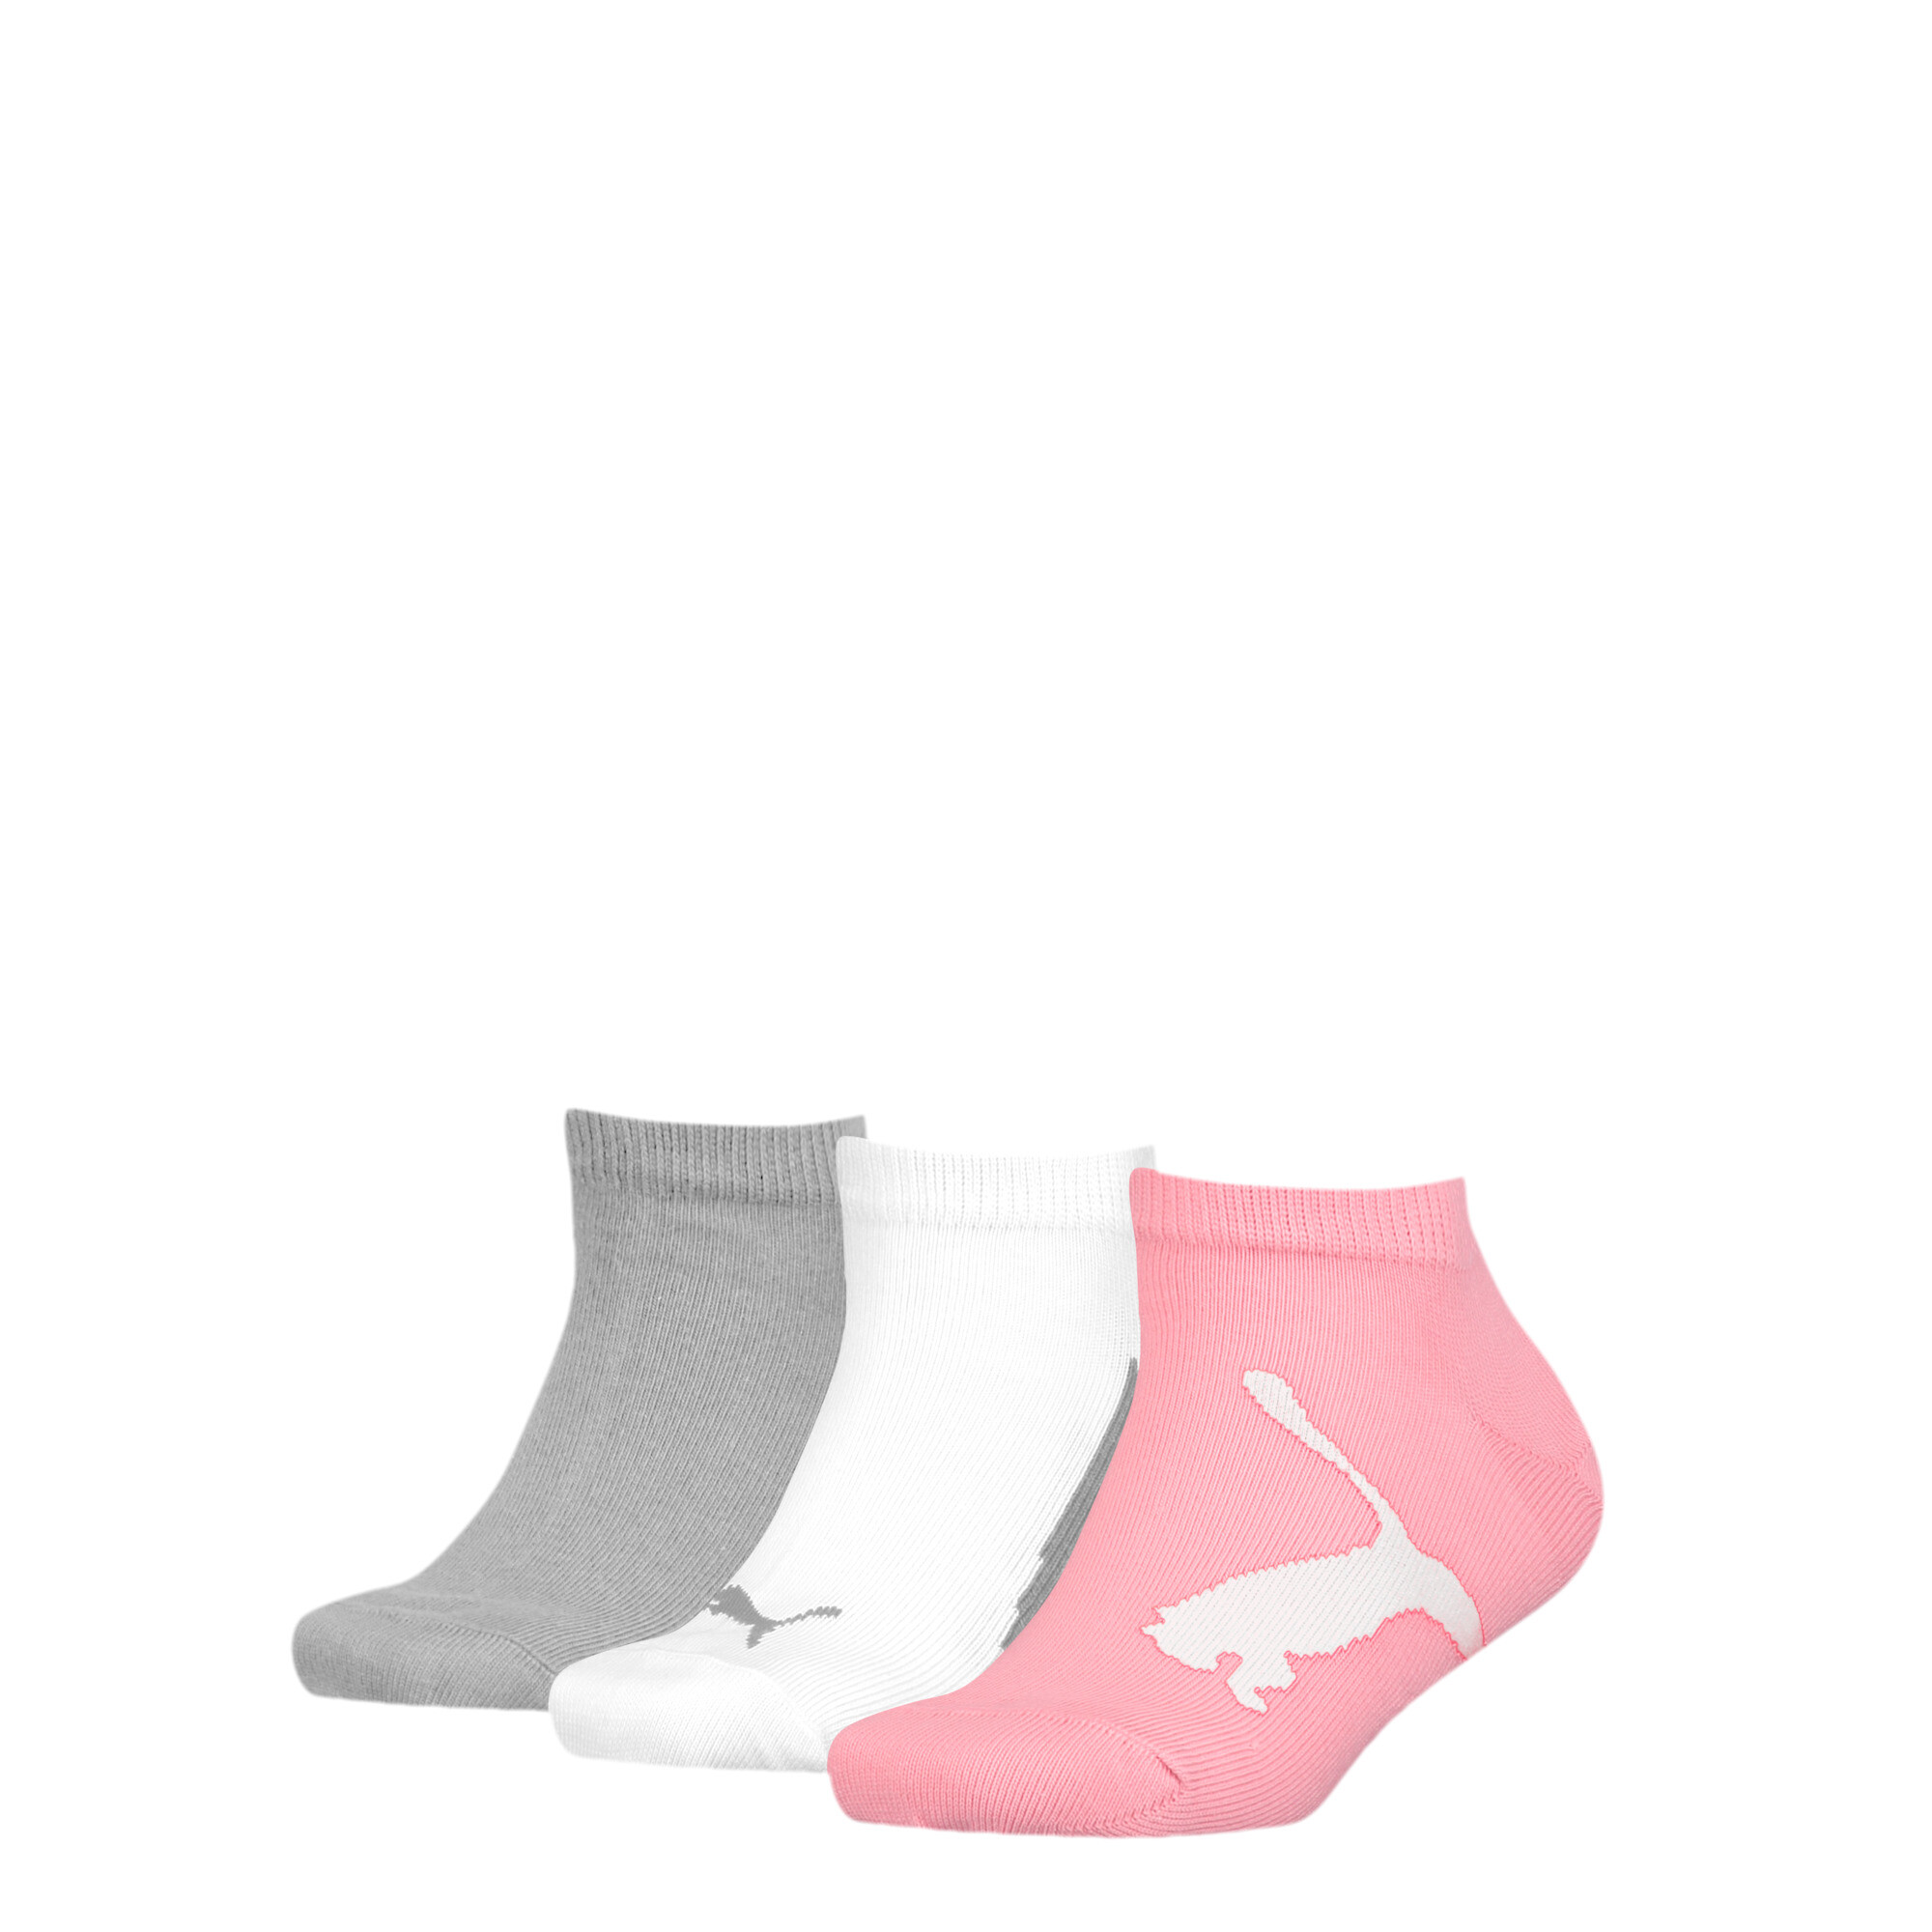 Kids' PUMA BWT Sneaker - Trainer Socks 3 Pack In Pink/Grey, Size 23-26